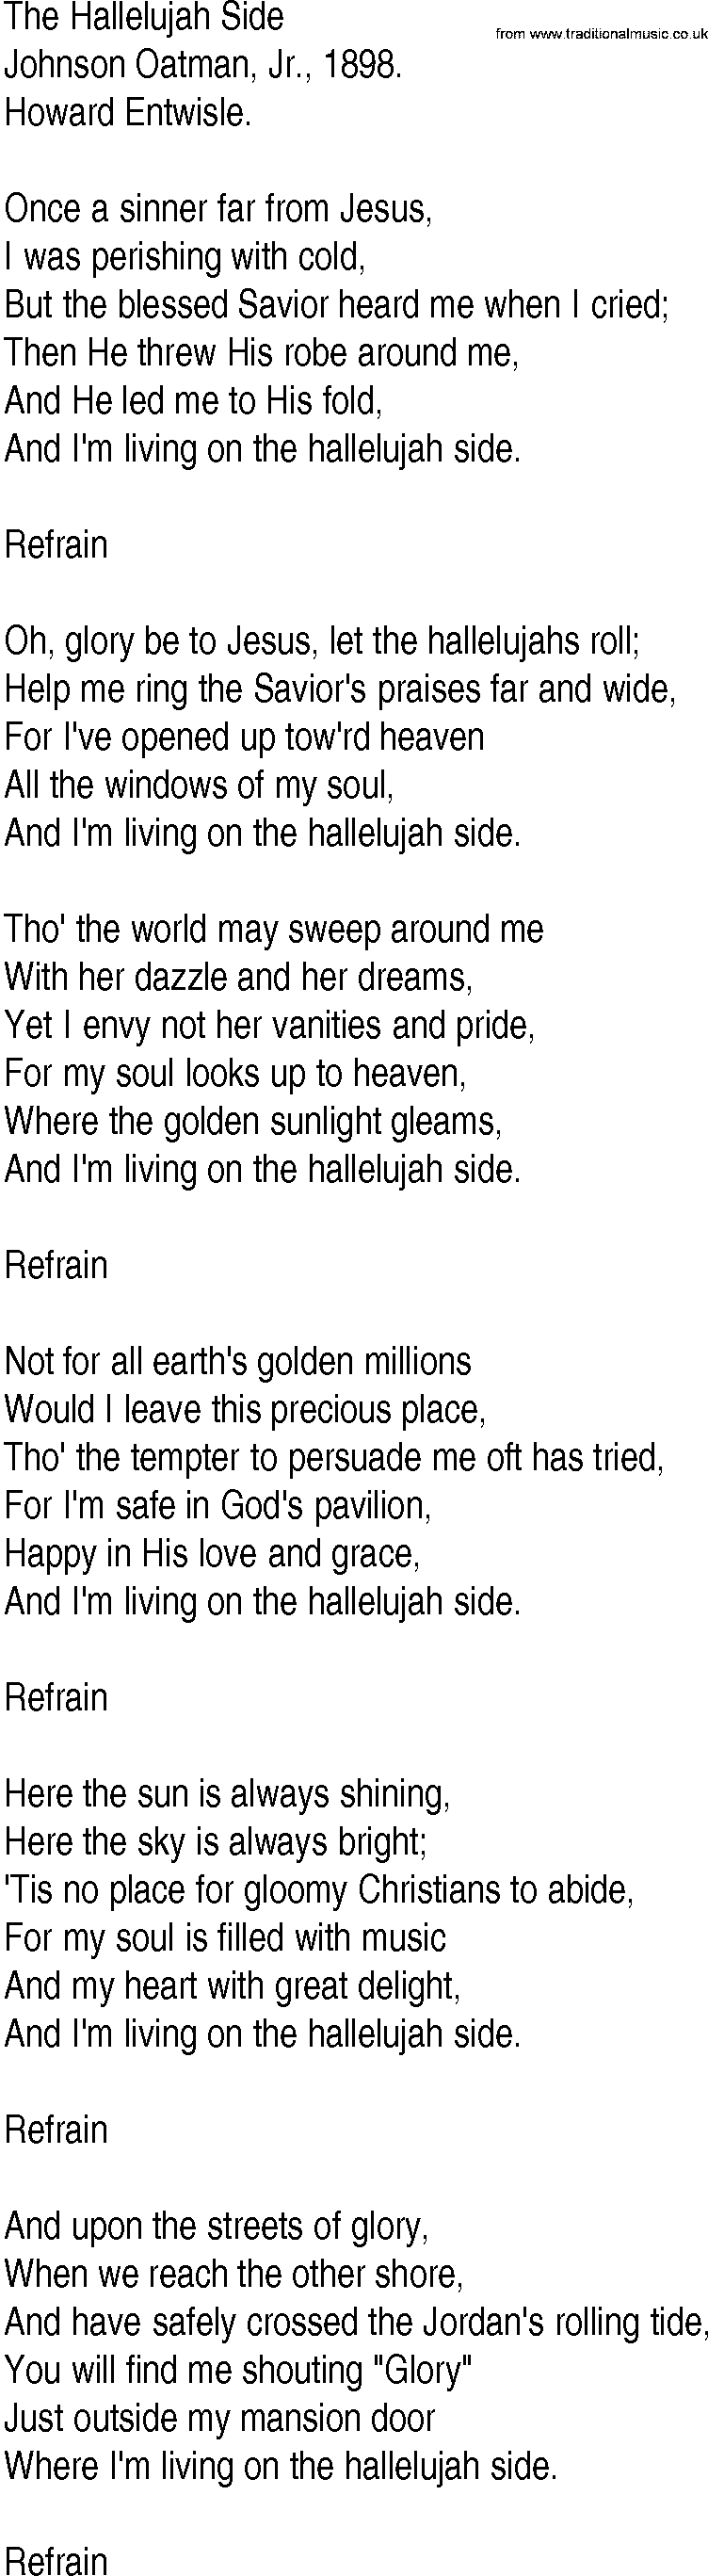 Hymn and Gospel Song: The Hallelujah Side by Johnson Oatman Jr lyrics